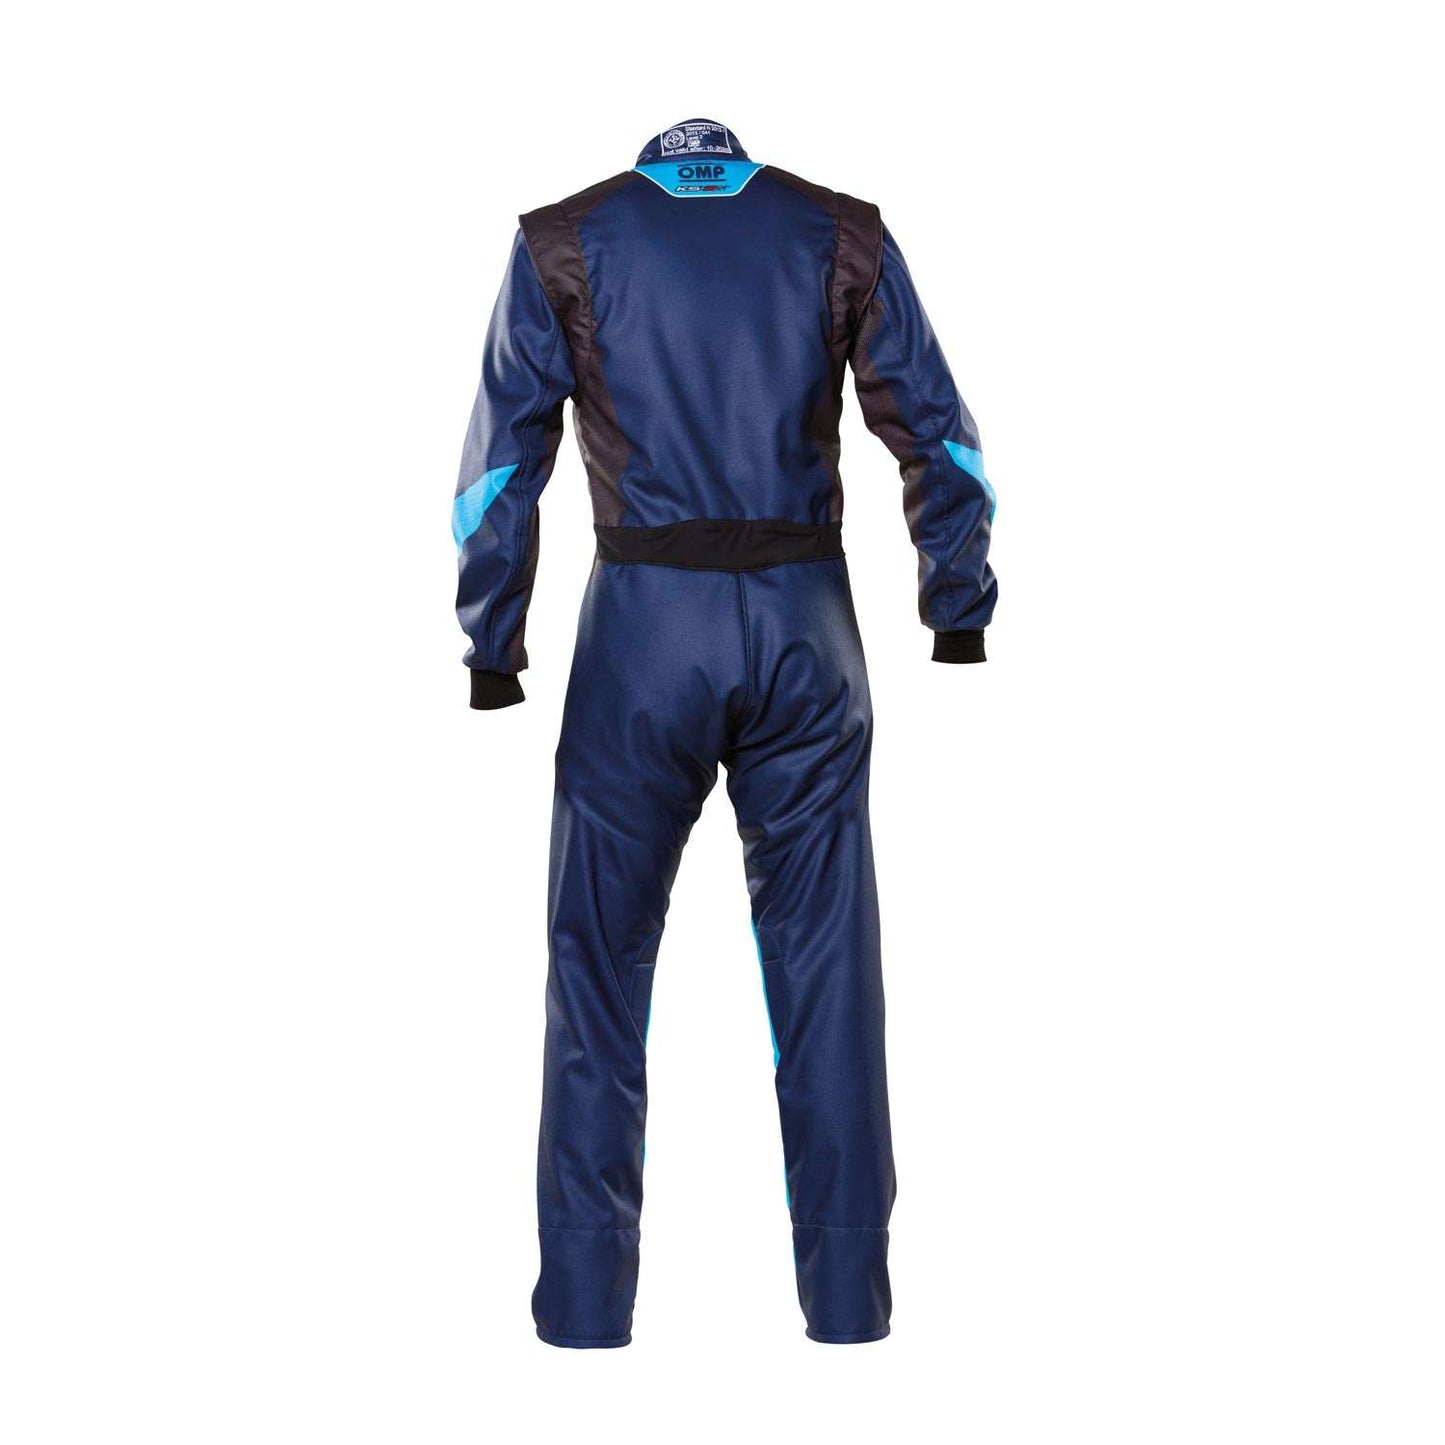 OMP KS-2 ART Karting Suit  (CIK-FIA homologation)